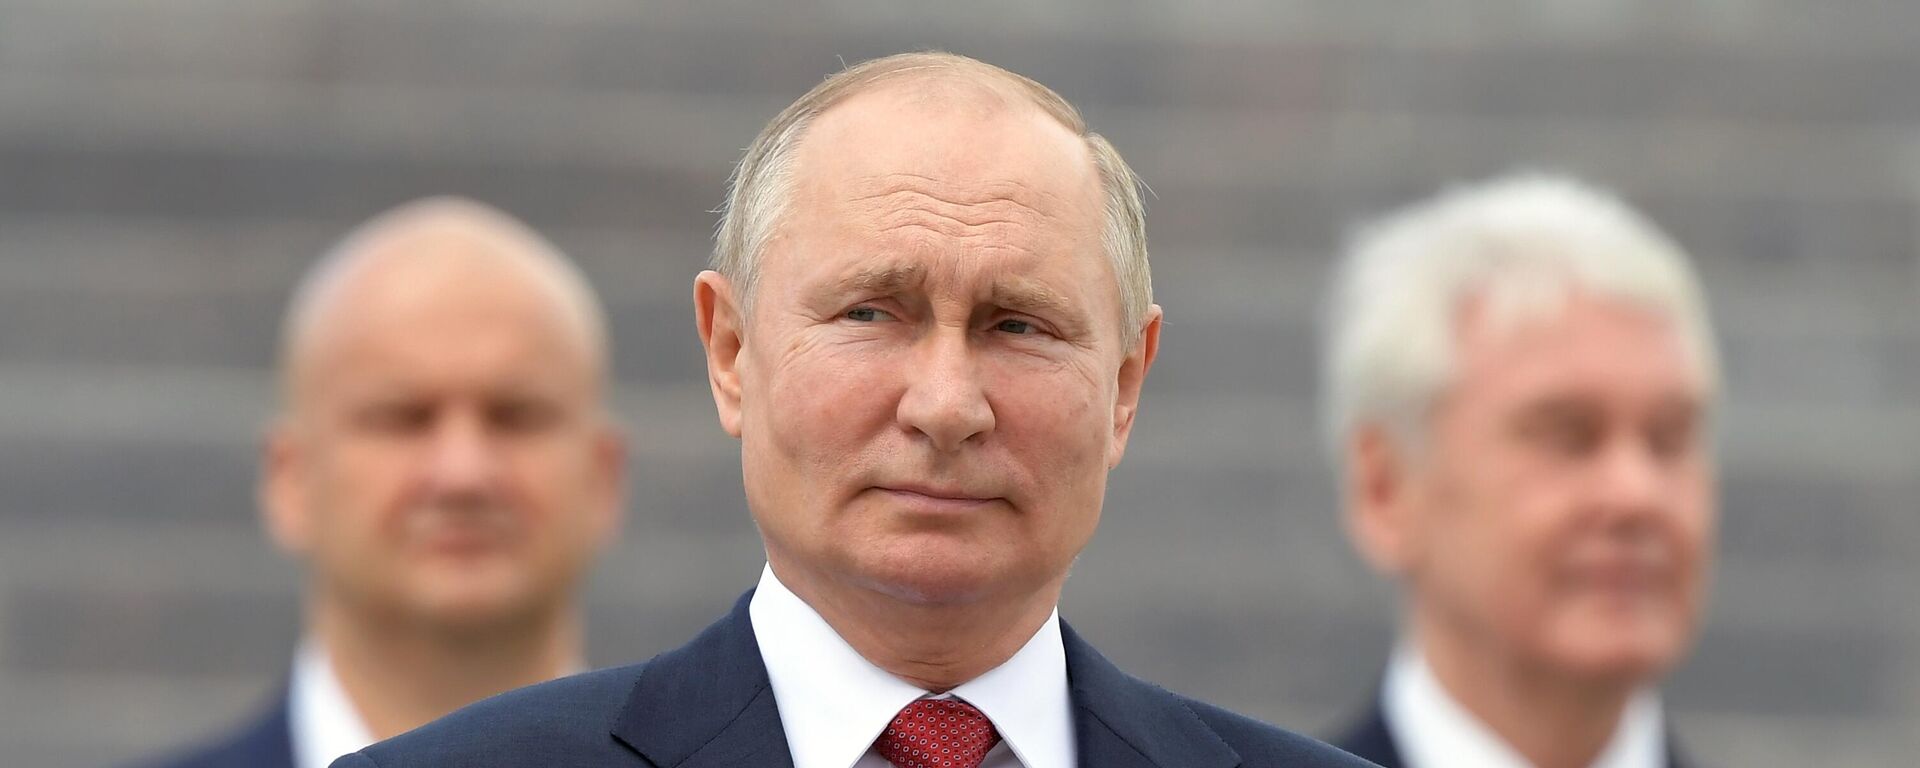 Predsednik Rusije Vladimir Putin - Sputnik Srbija, 1920, 22.08.2021